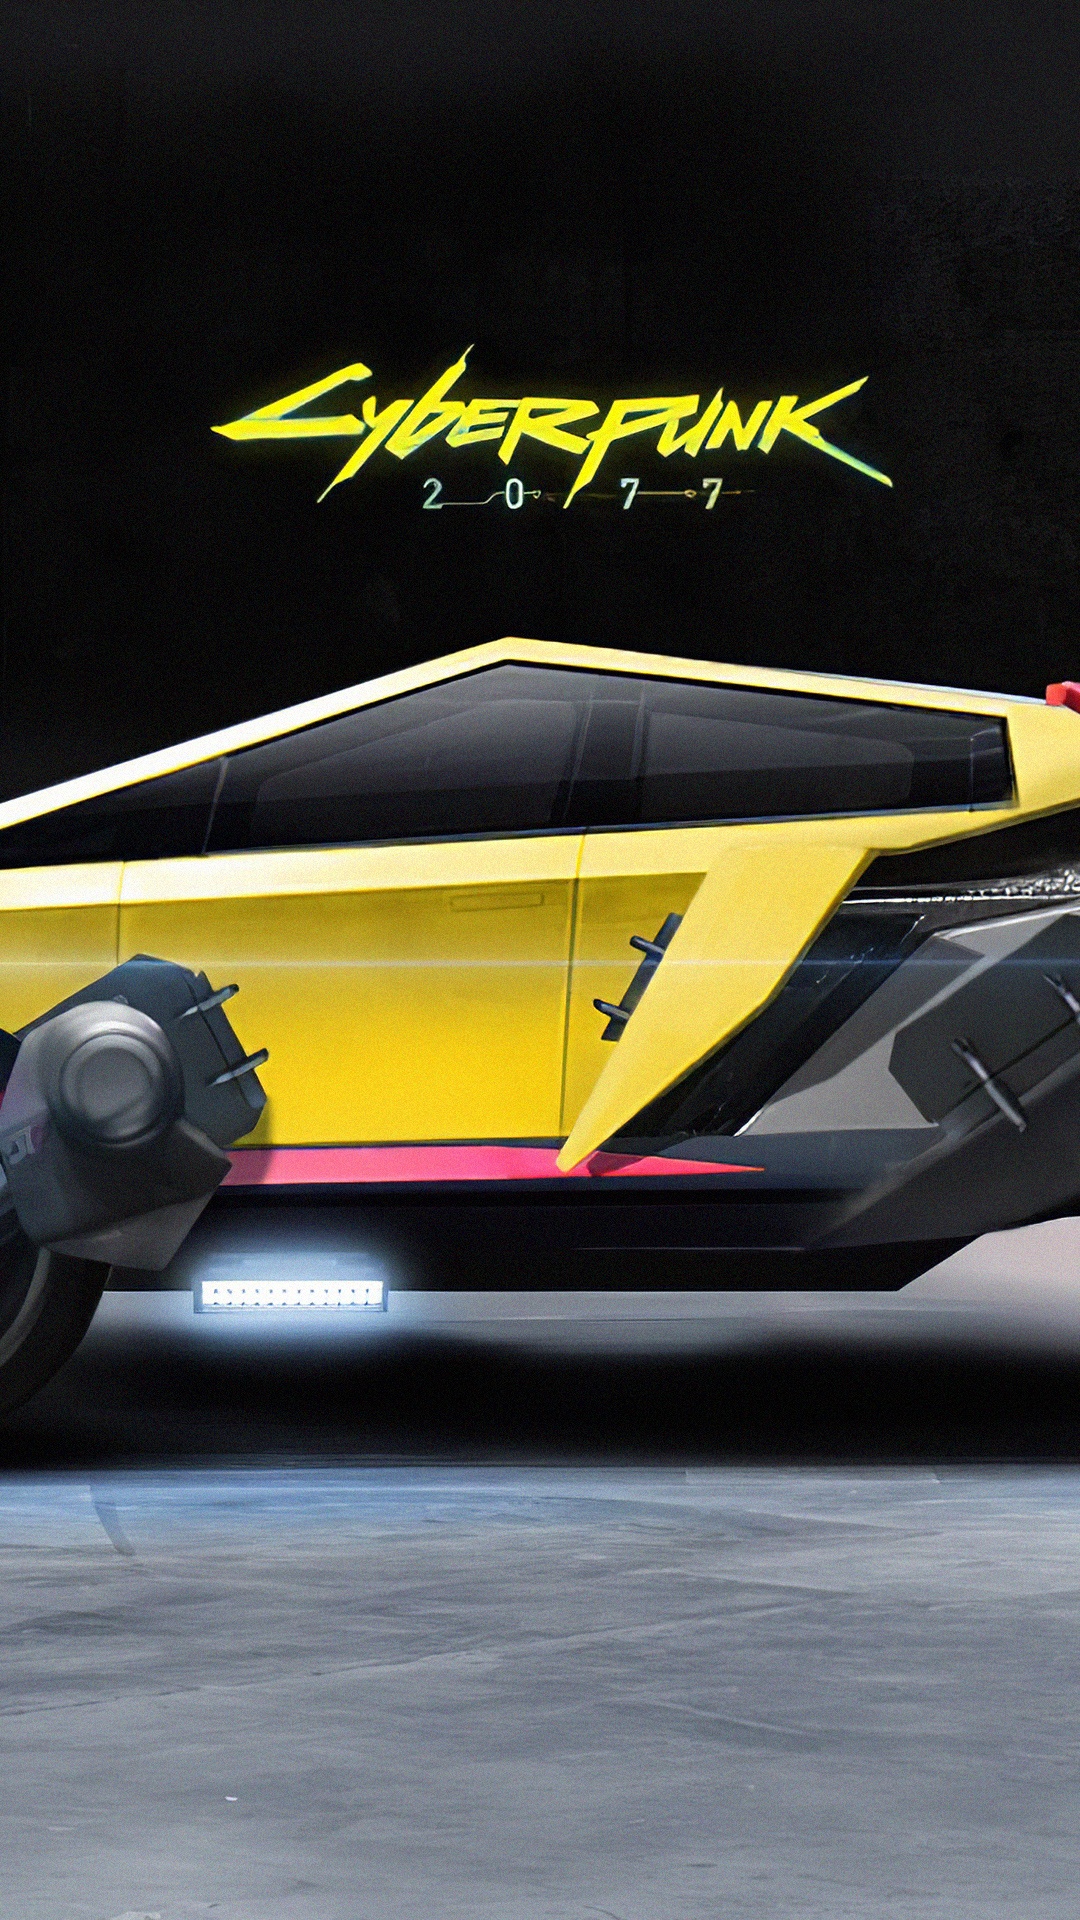 Tesla Cybertruck, 黄色的, 超级跑车, 定制的车, 汽车外 壁纸 1080x1920 允许